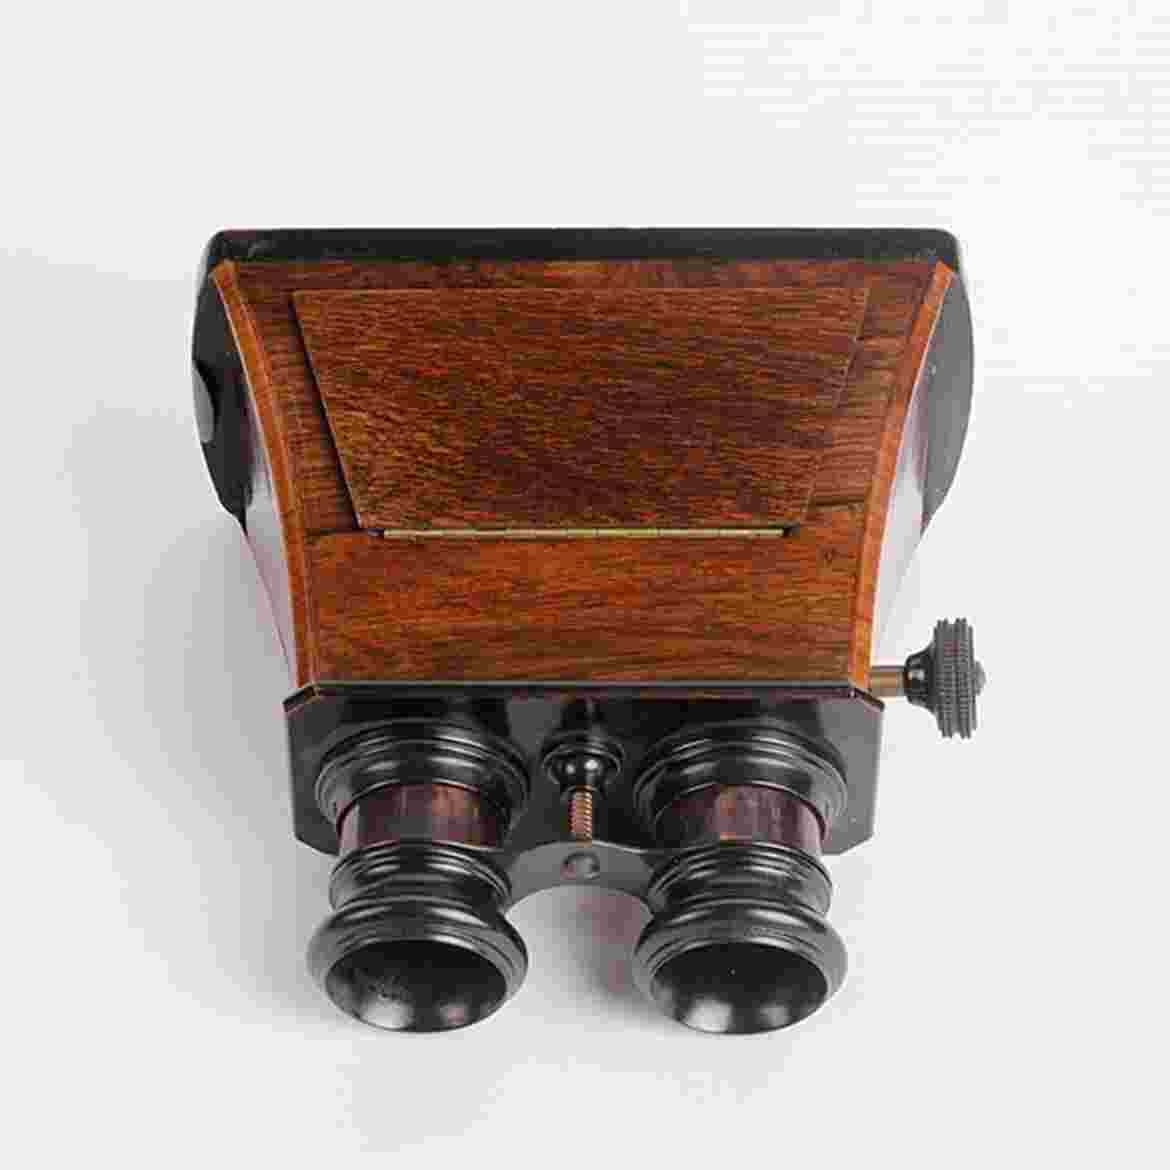 600Px Stereoscope (9448)